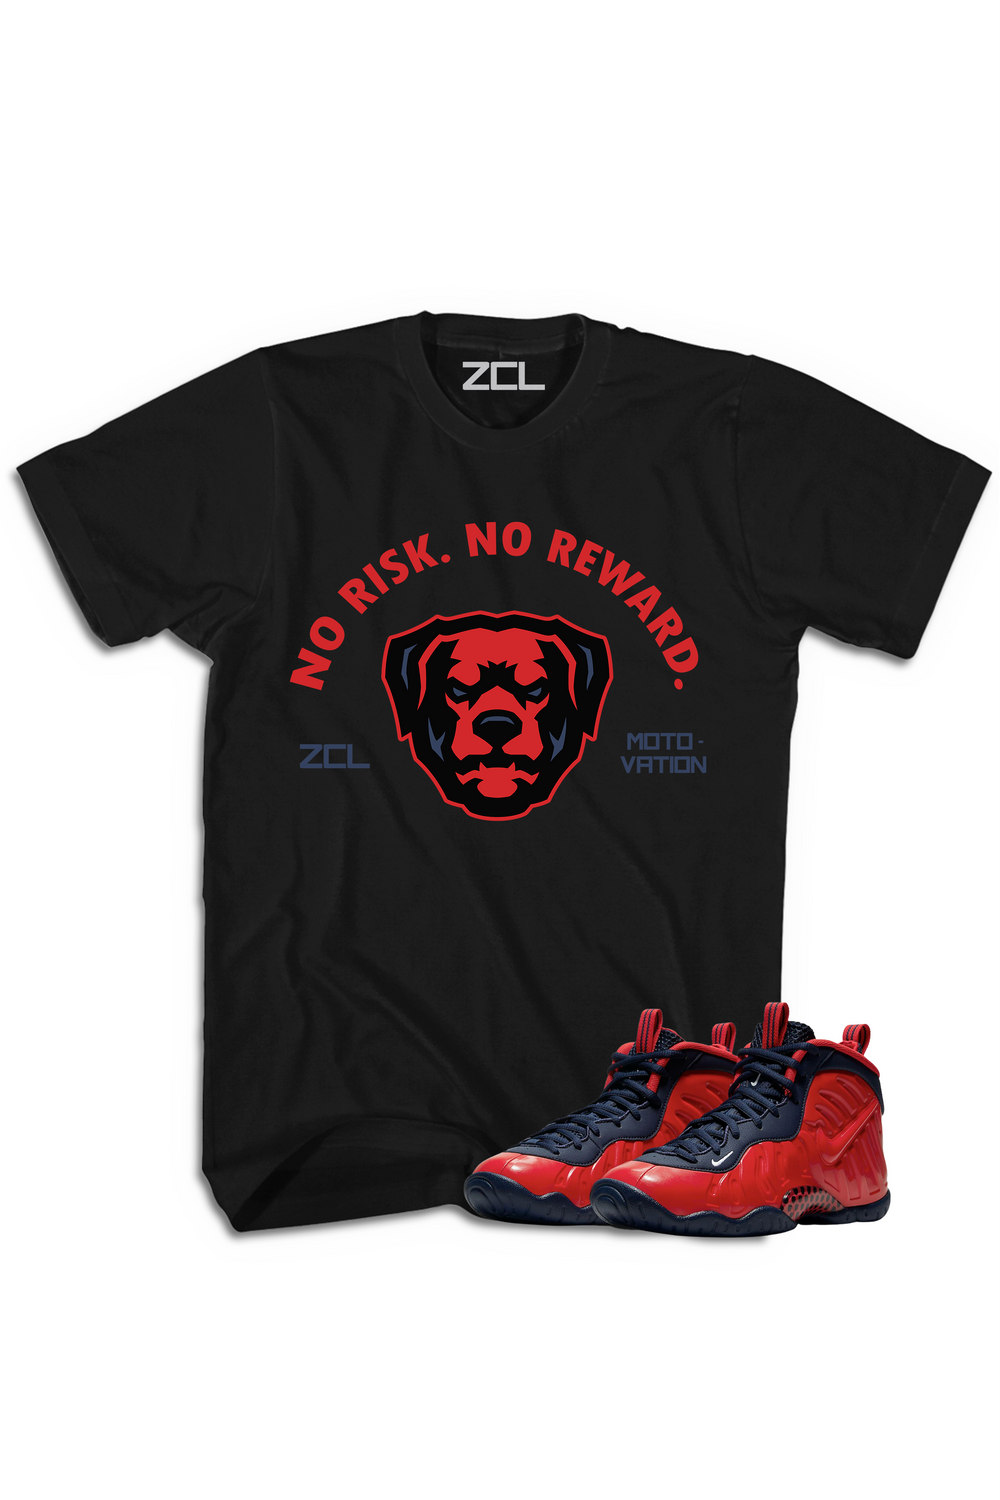 Nike Air Foamposite Pro USA "No Risk No Reward" Tee Crimson - Zamage